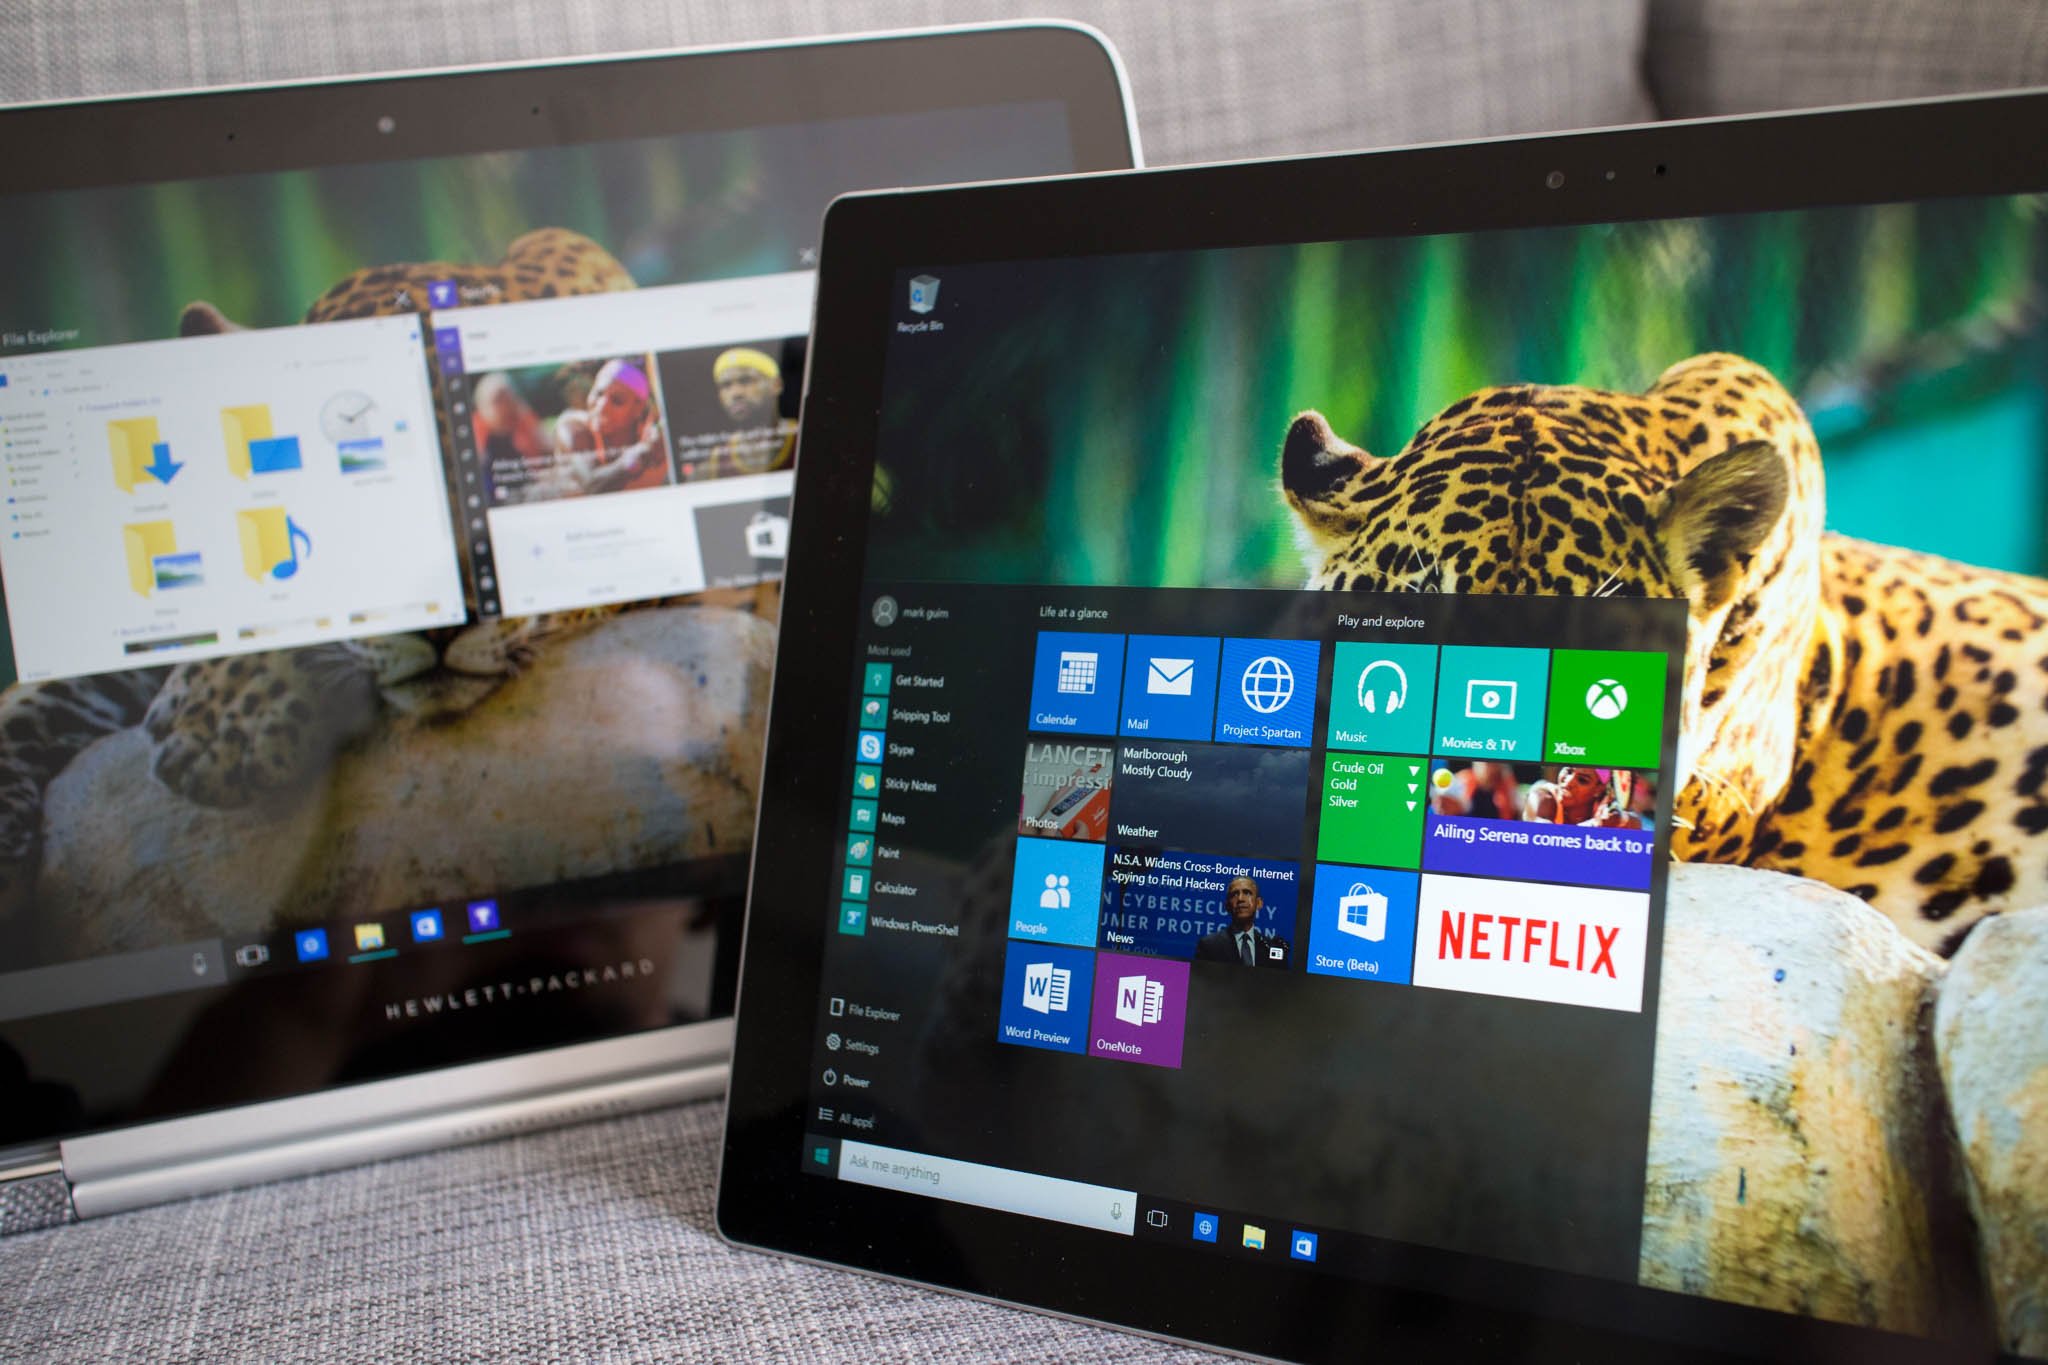 Fall Creators Update now on 20.4 percent of Windows 10 PCs, AdDuplex says